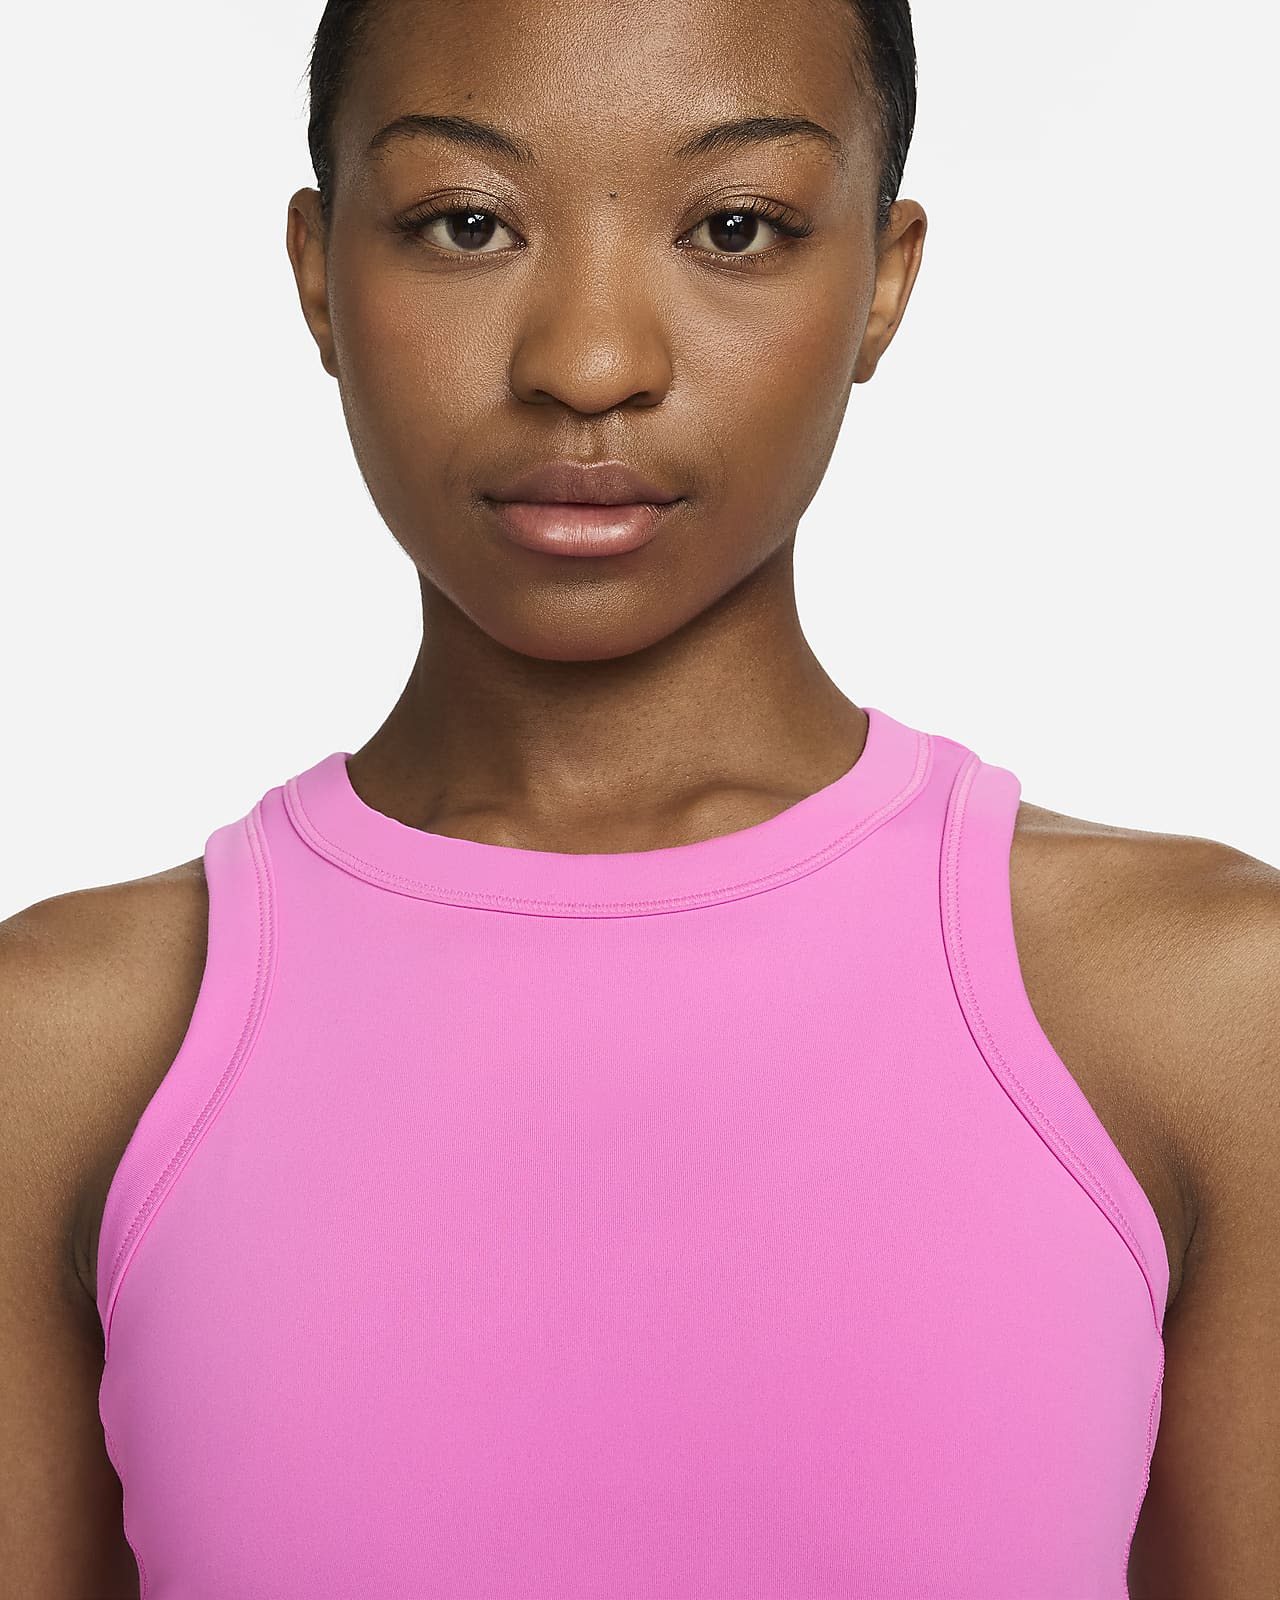 Nike Women's One Dri Fit Logo Racerback Tank Top Pink Size Small 